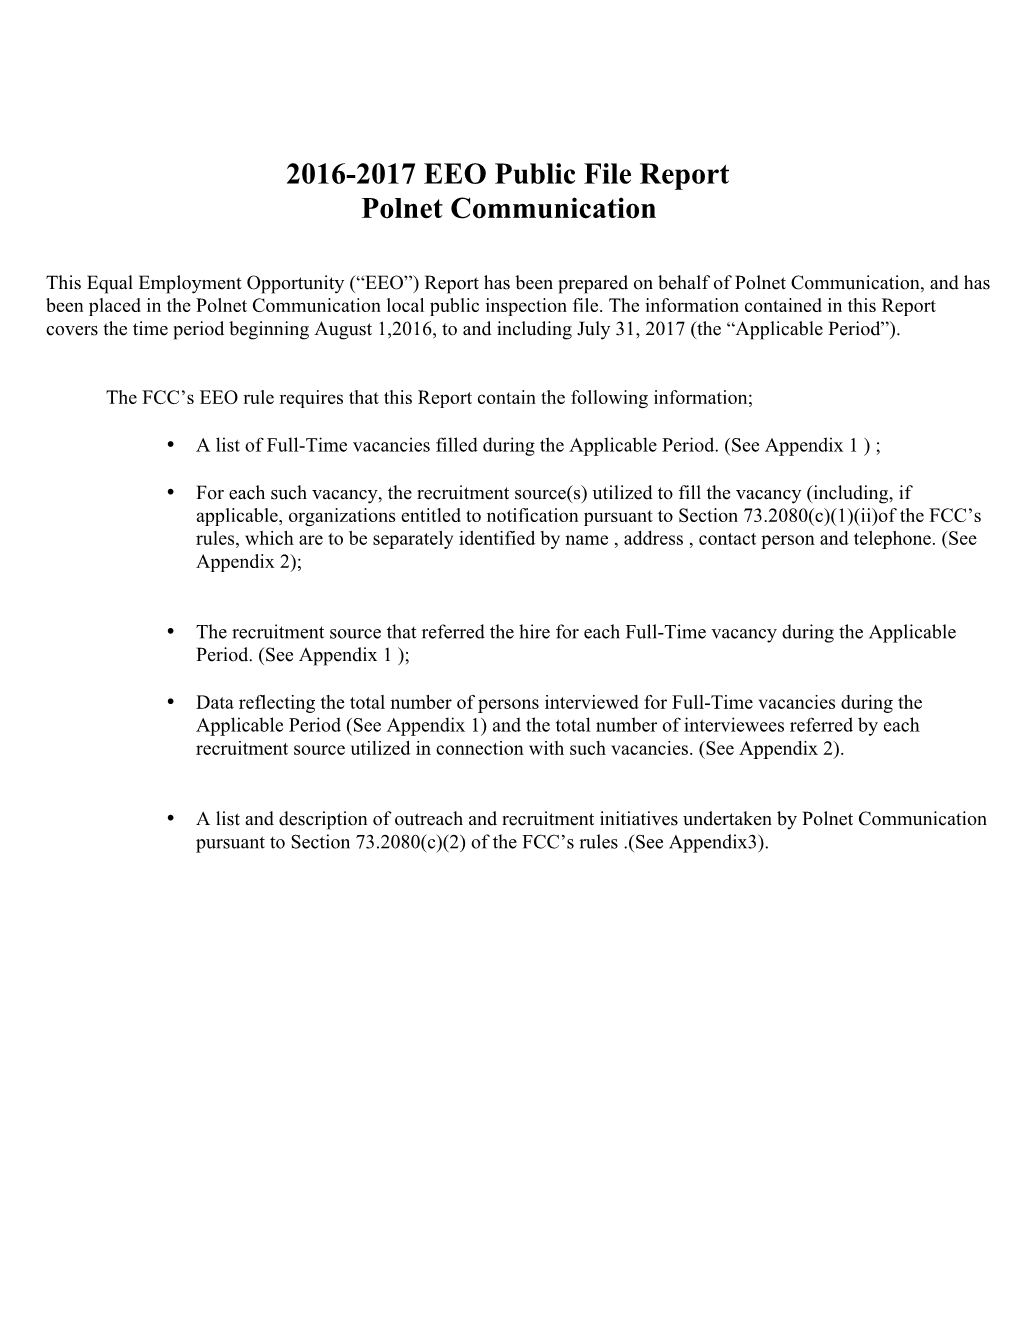 2016-2017 EEO Public File Report Polnet Communication